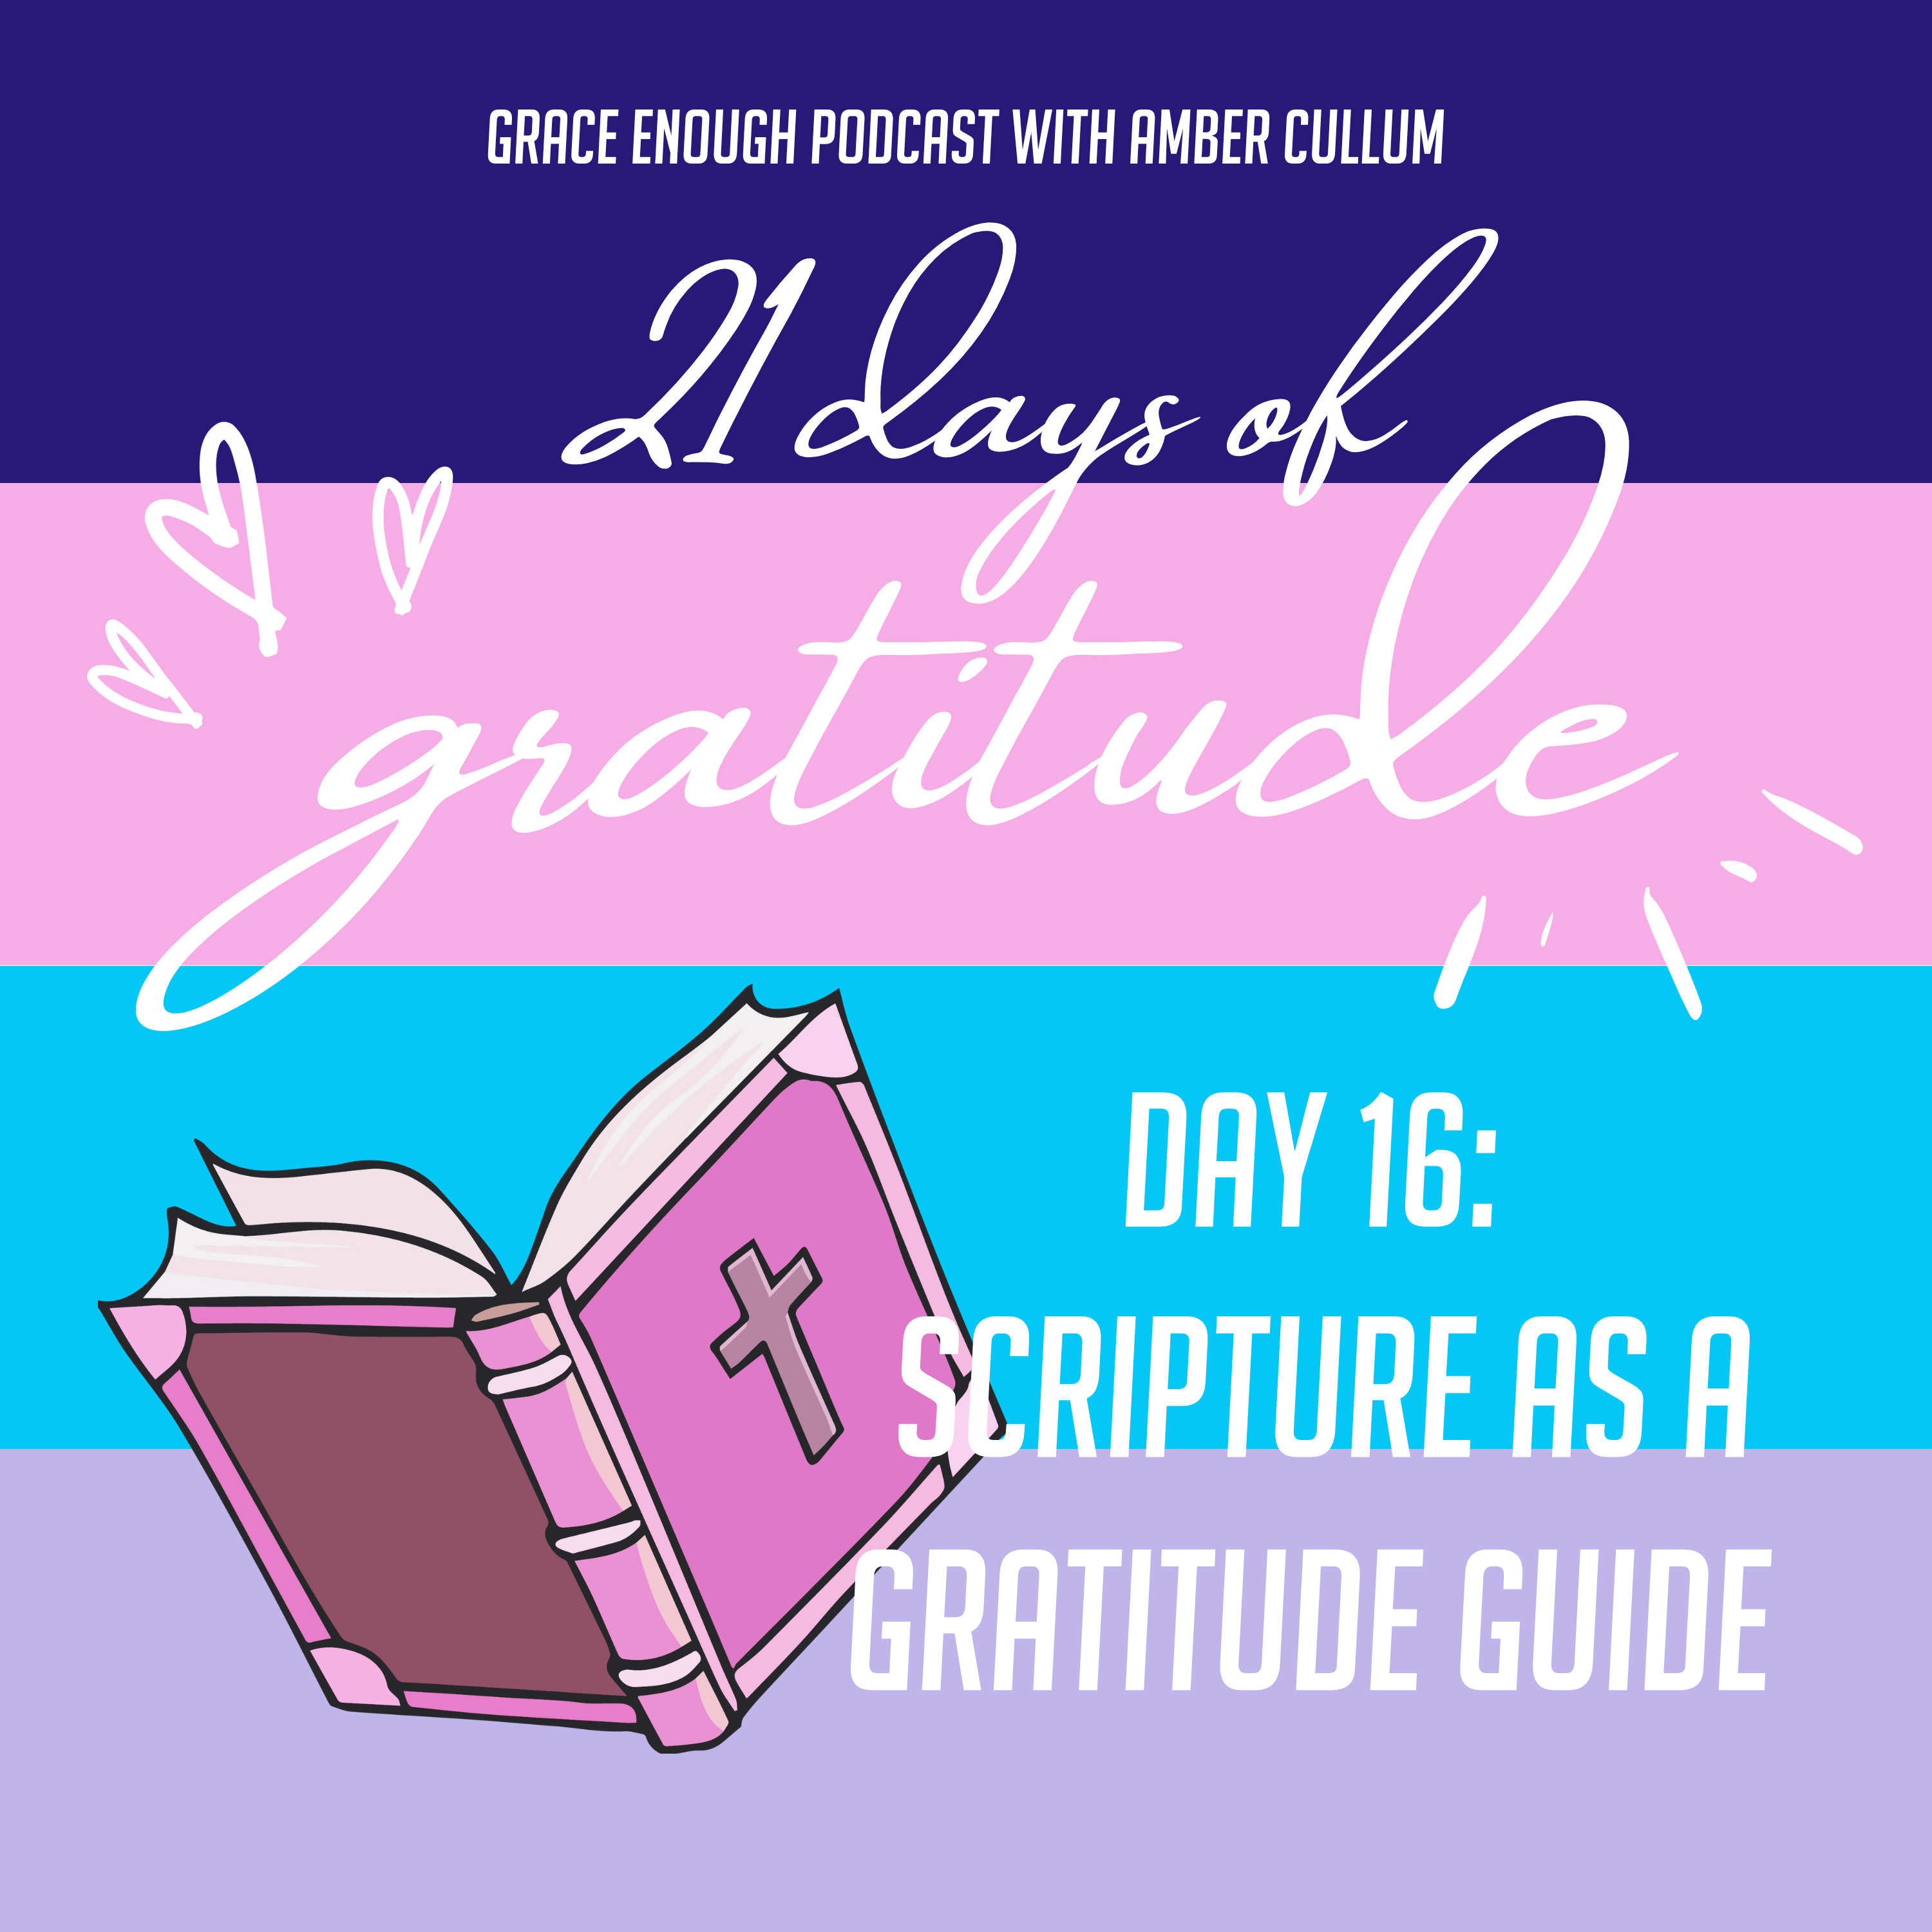 21 Days of Gratitude: Day 16, Scripture as a Gratitude Guide